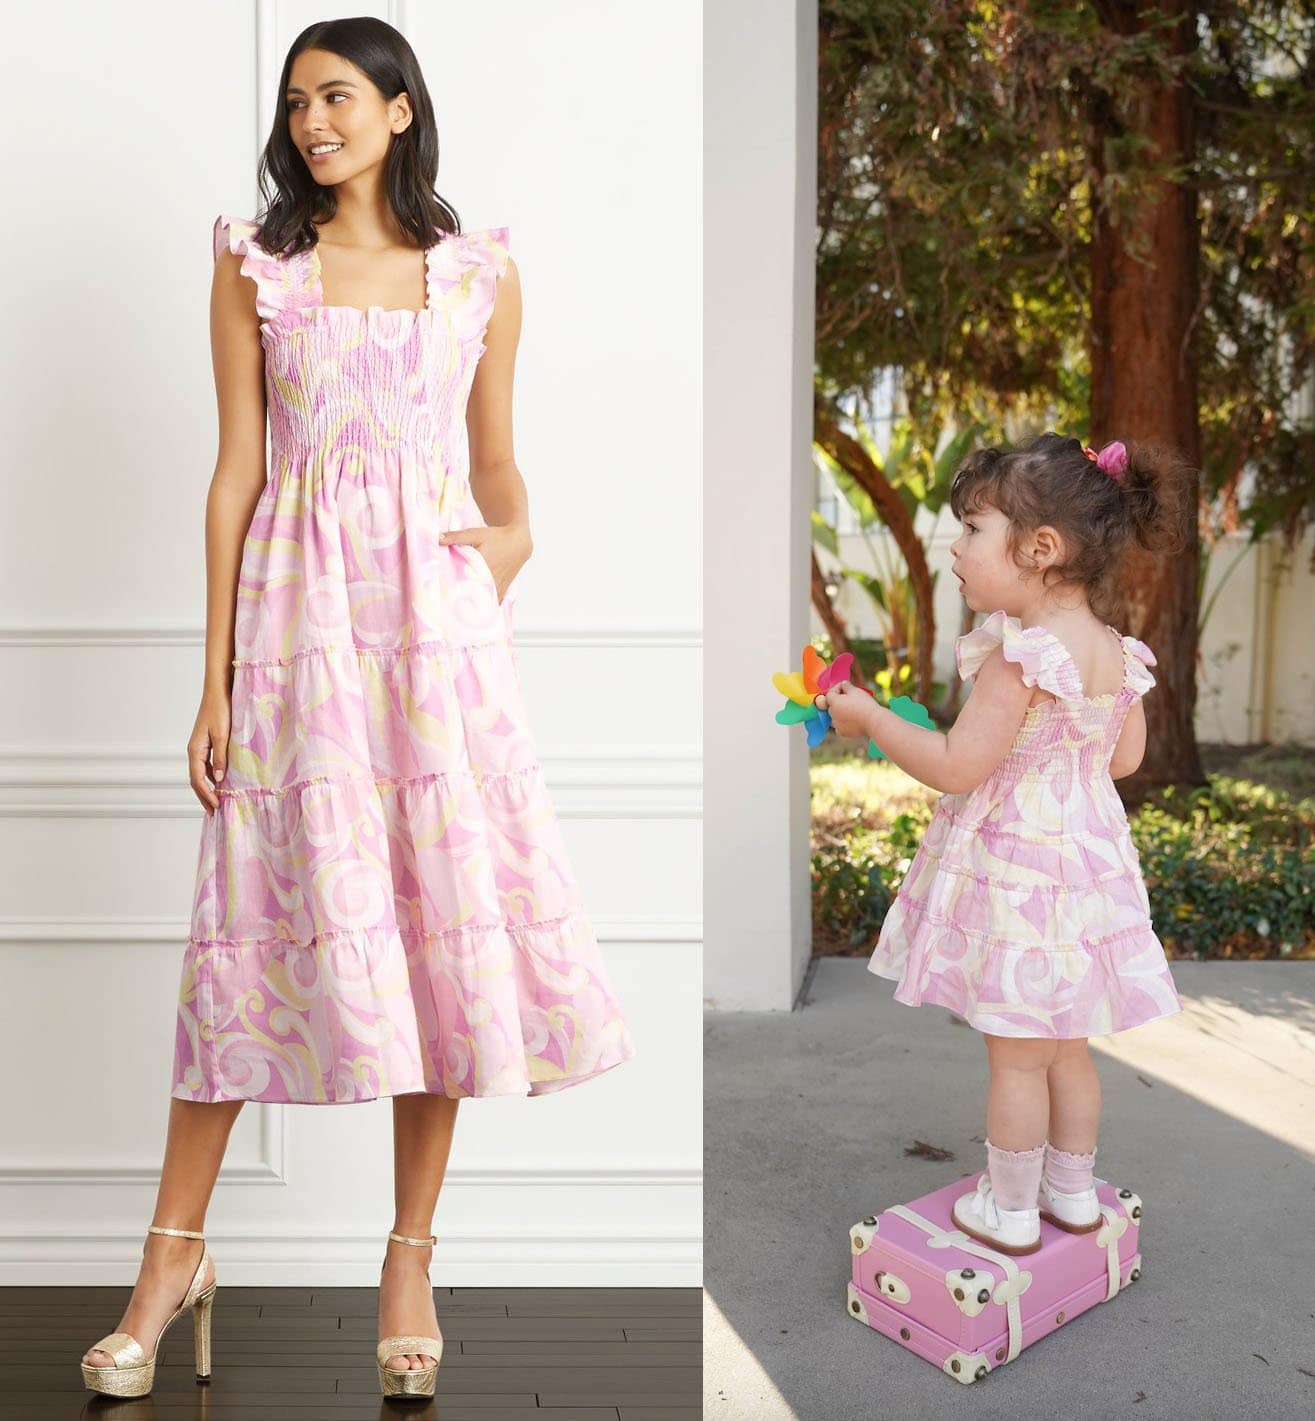 The Ellie Nap Dress in Candy Kaleidoscope Linen; The Tiny Ellie Nap Dress